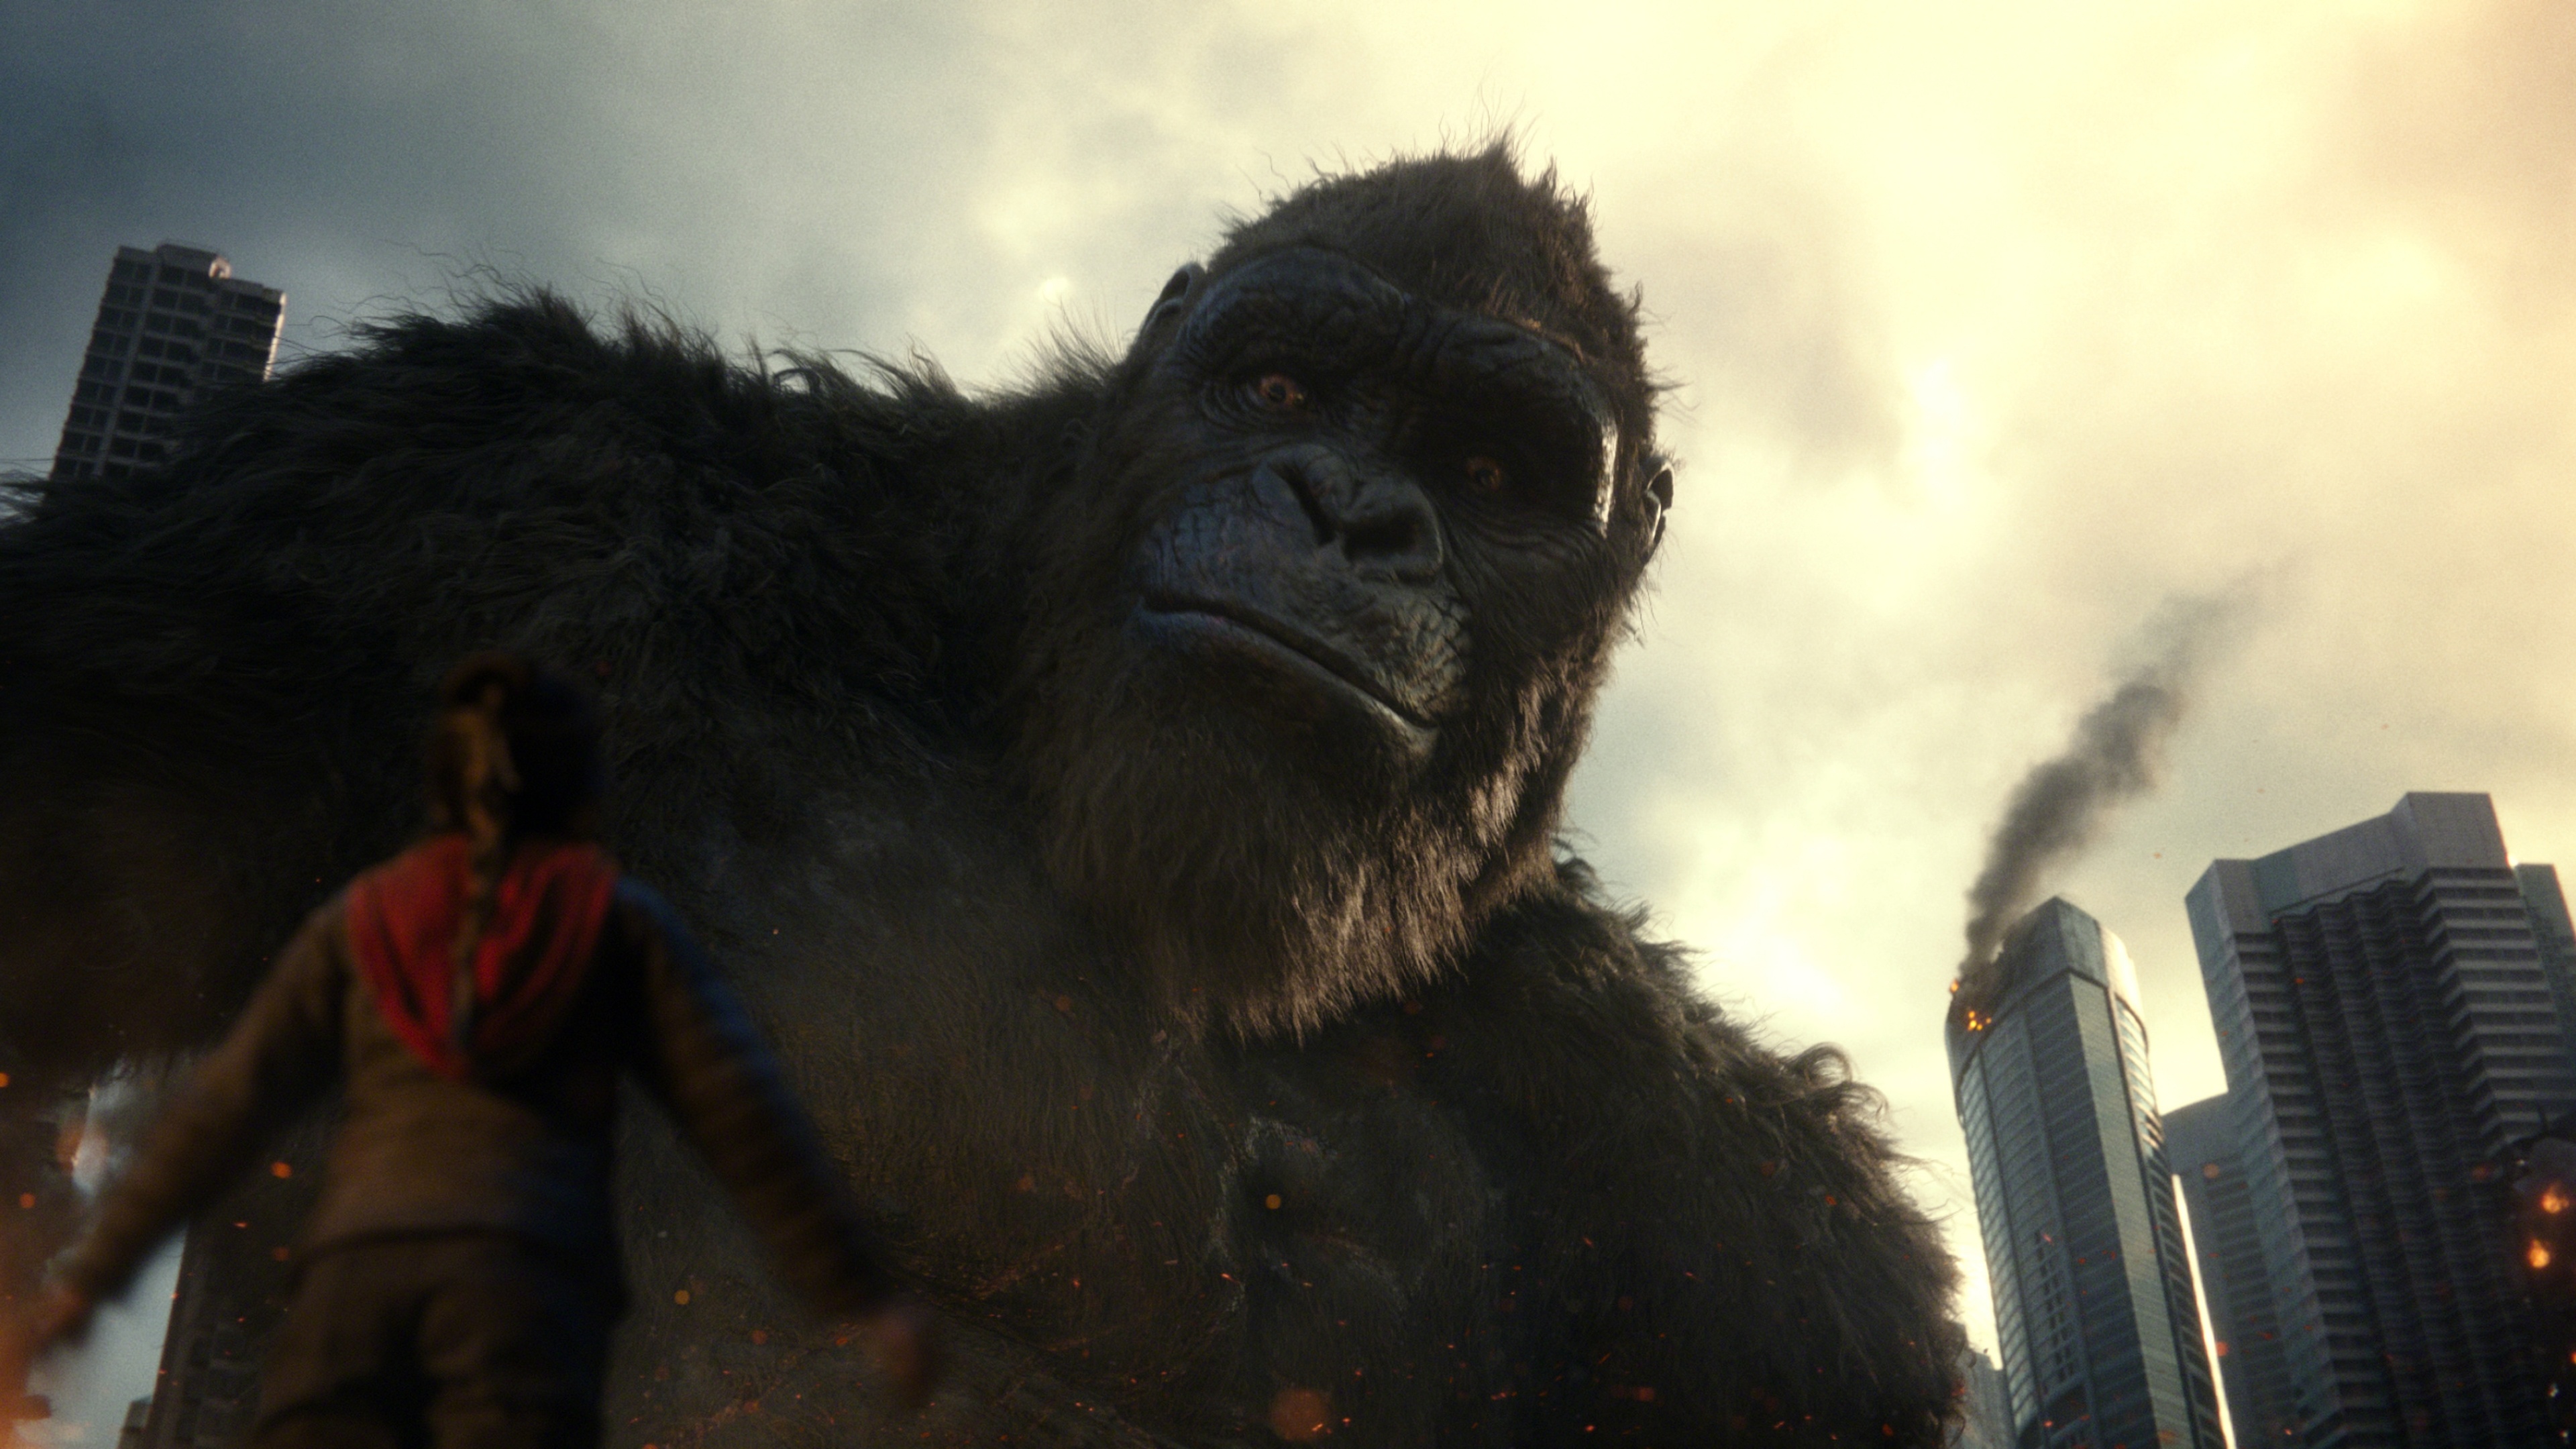 King Kong: A fictional giant monster resembling a gorilla, Movie. 3840x2160 4K Wallpaper.